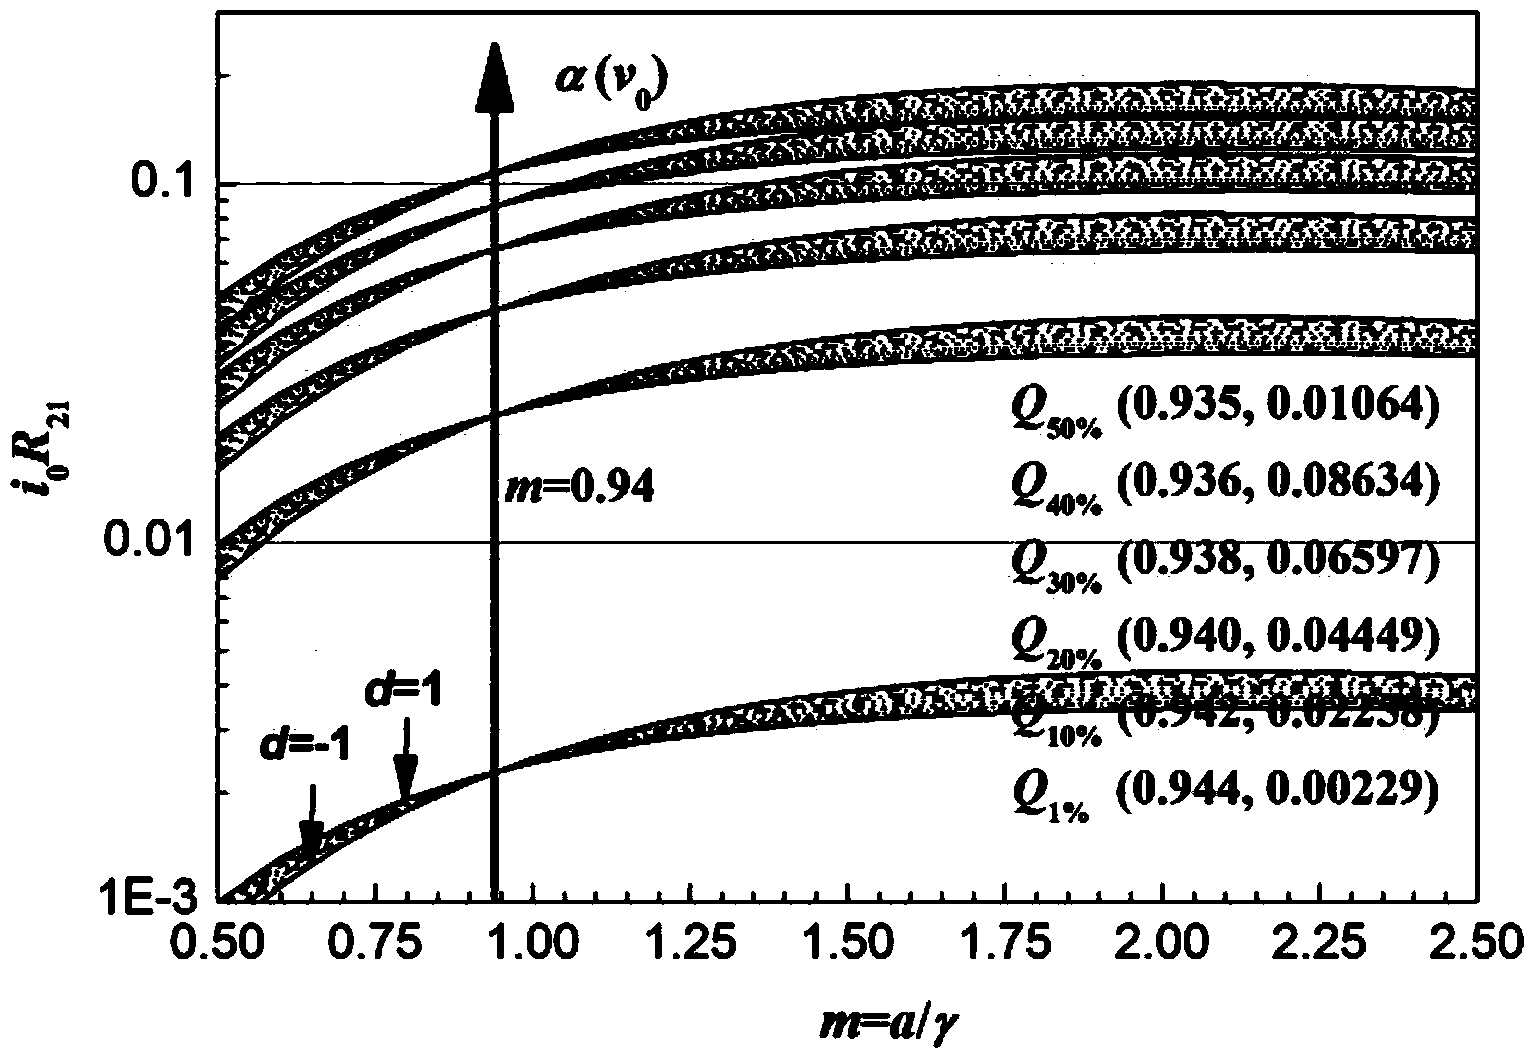 Gas absorptivity online measurement method based on modulation factor